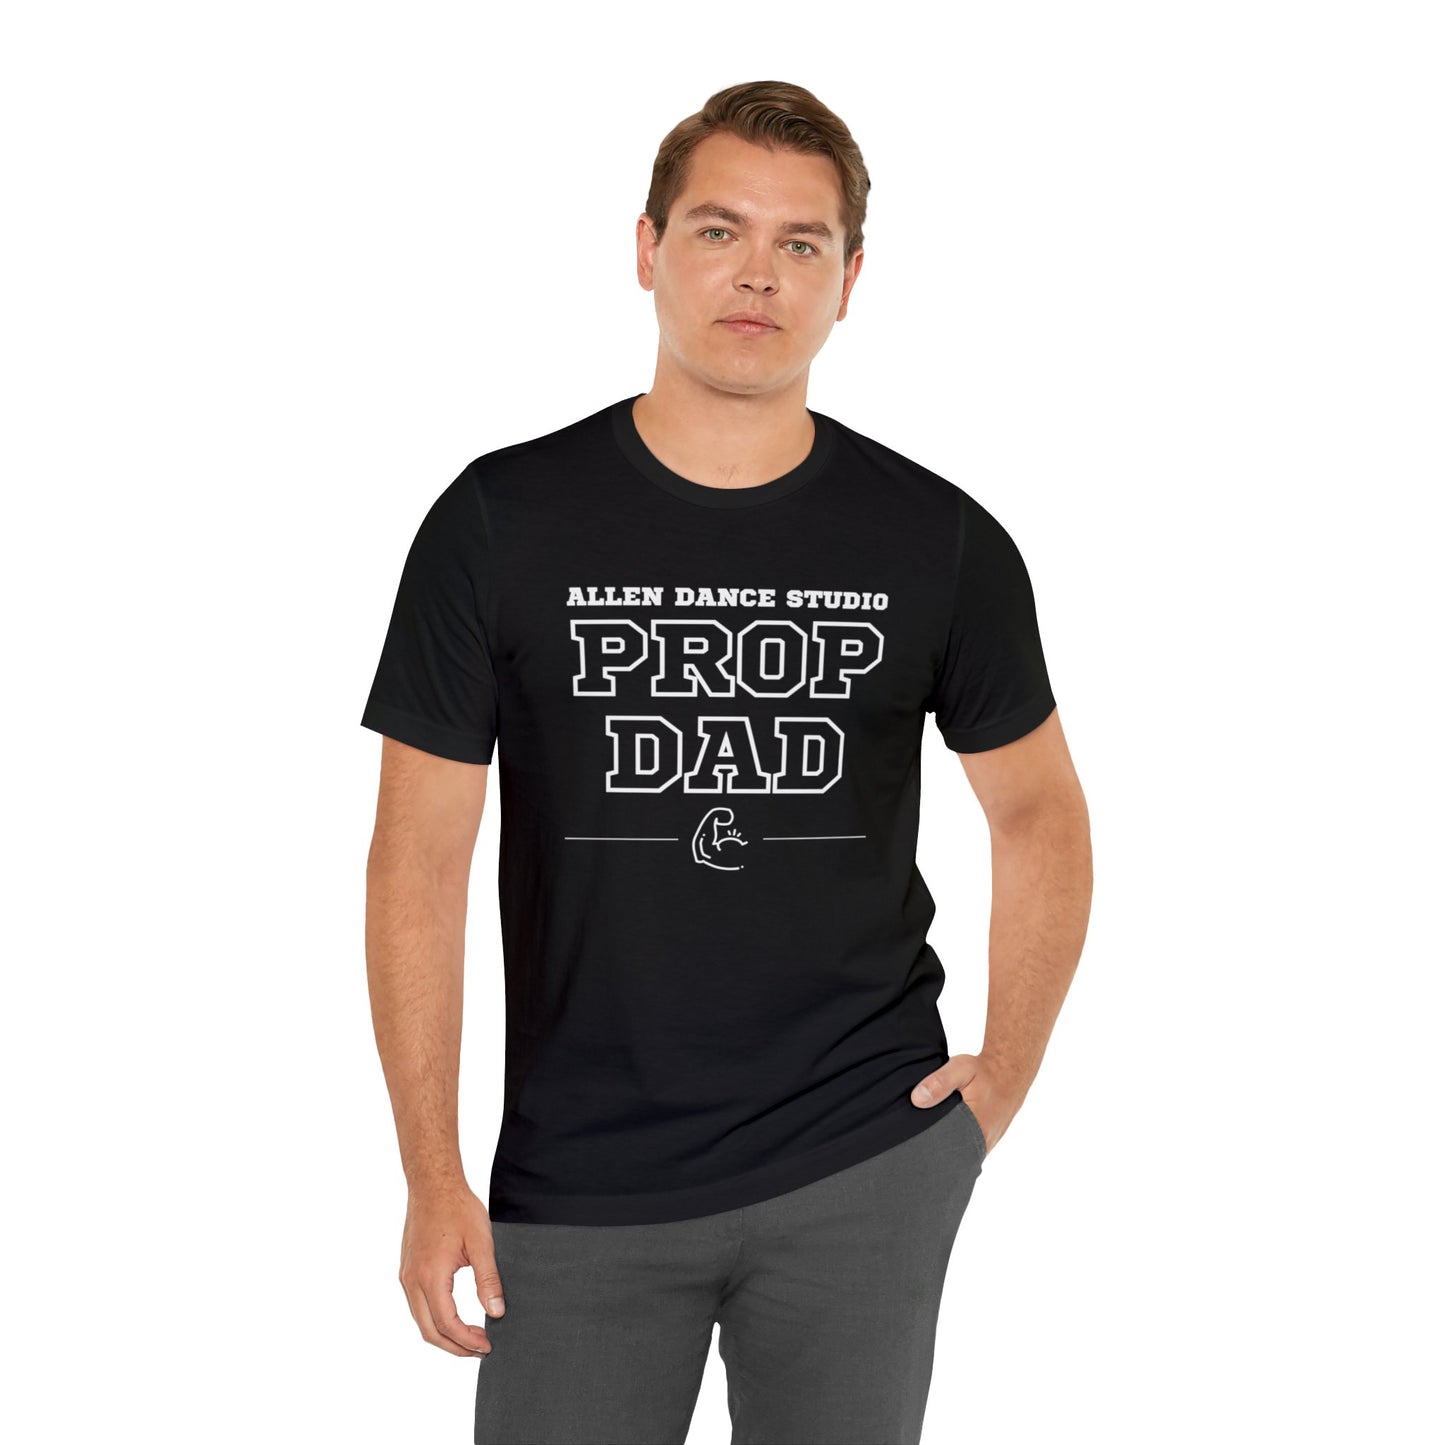 ADS Prop Dad Shirt